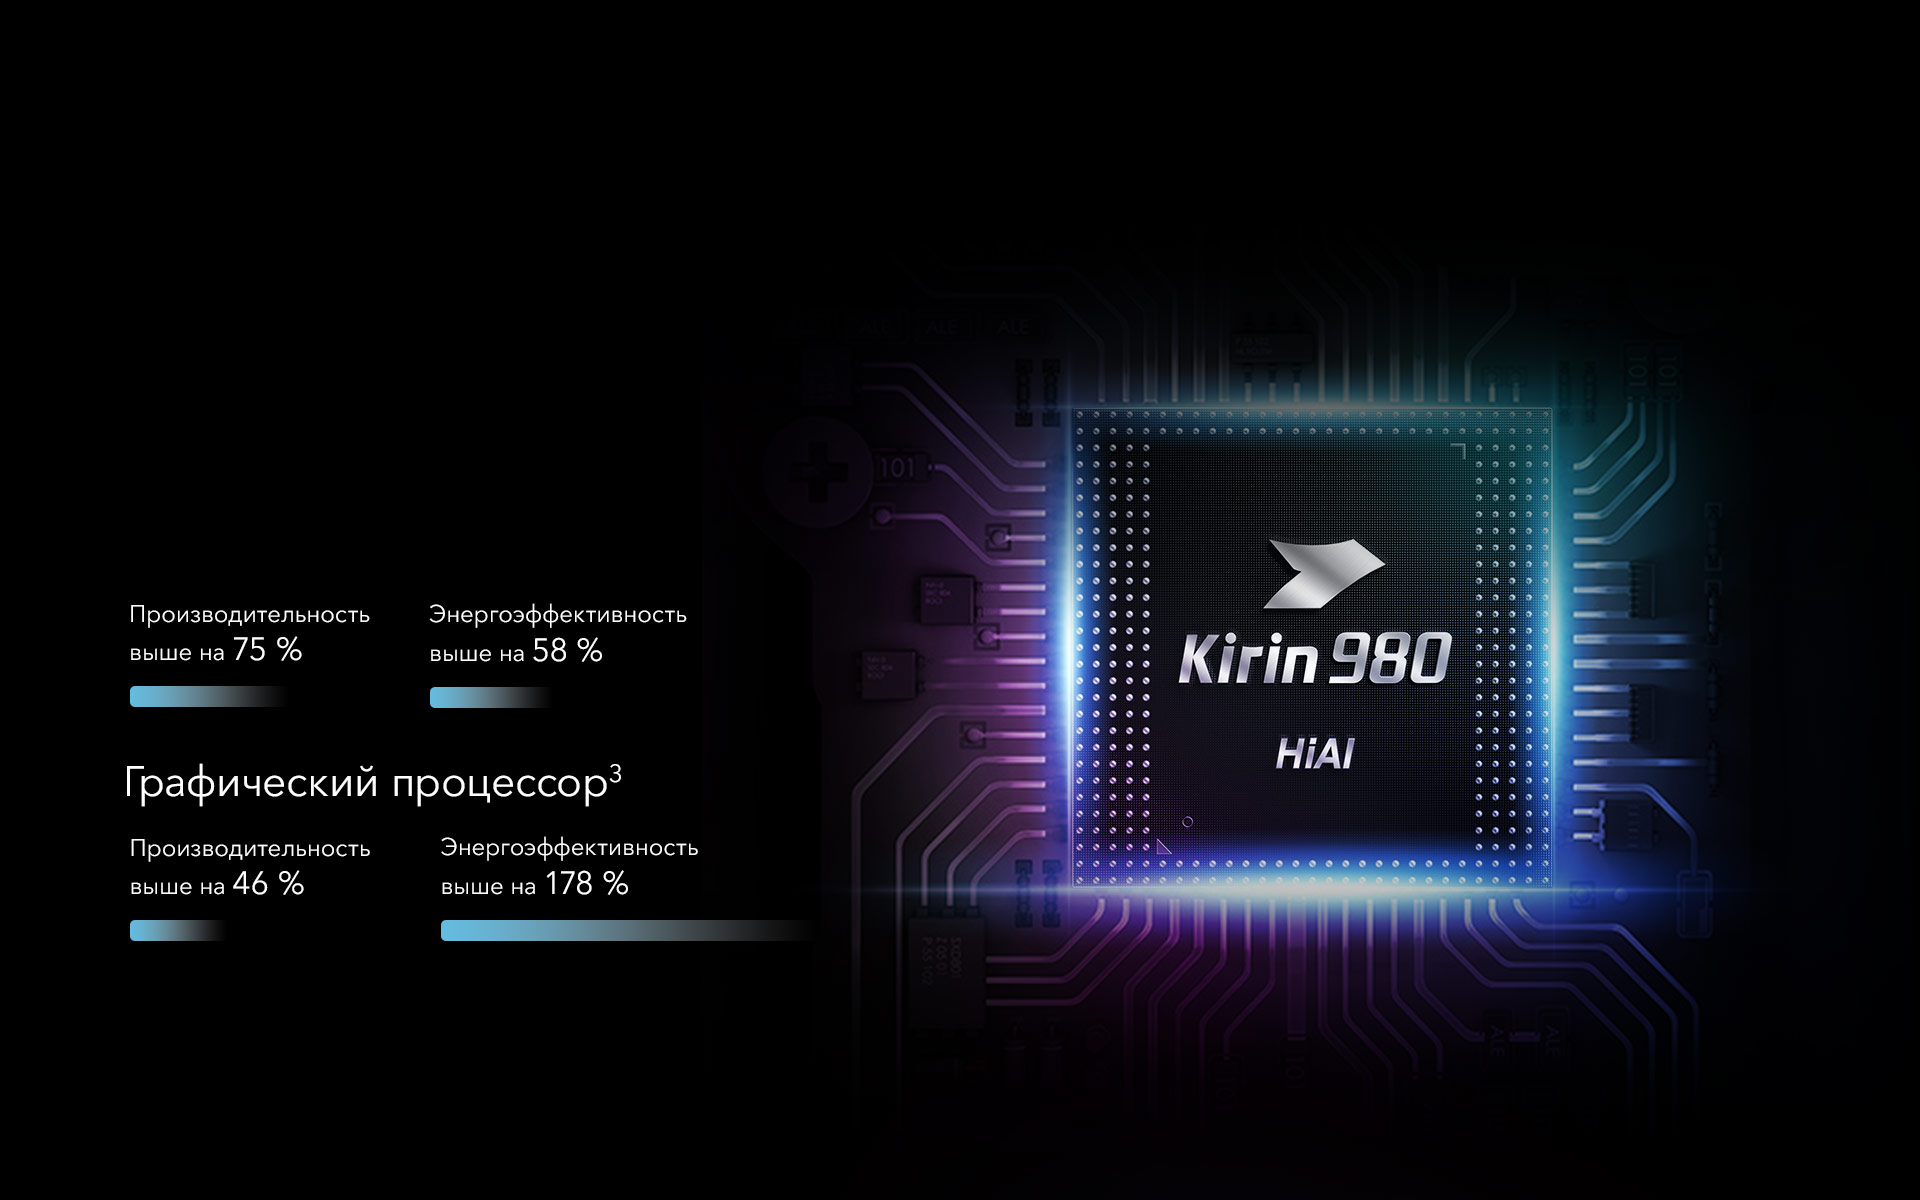 Huawei Honor 20 Pro Красноярск